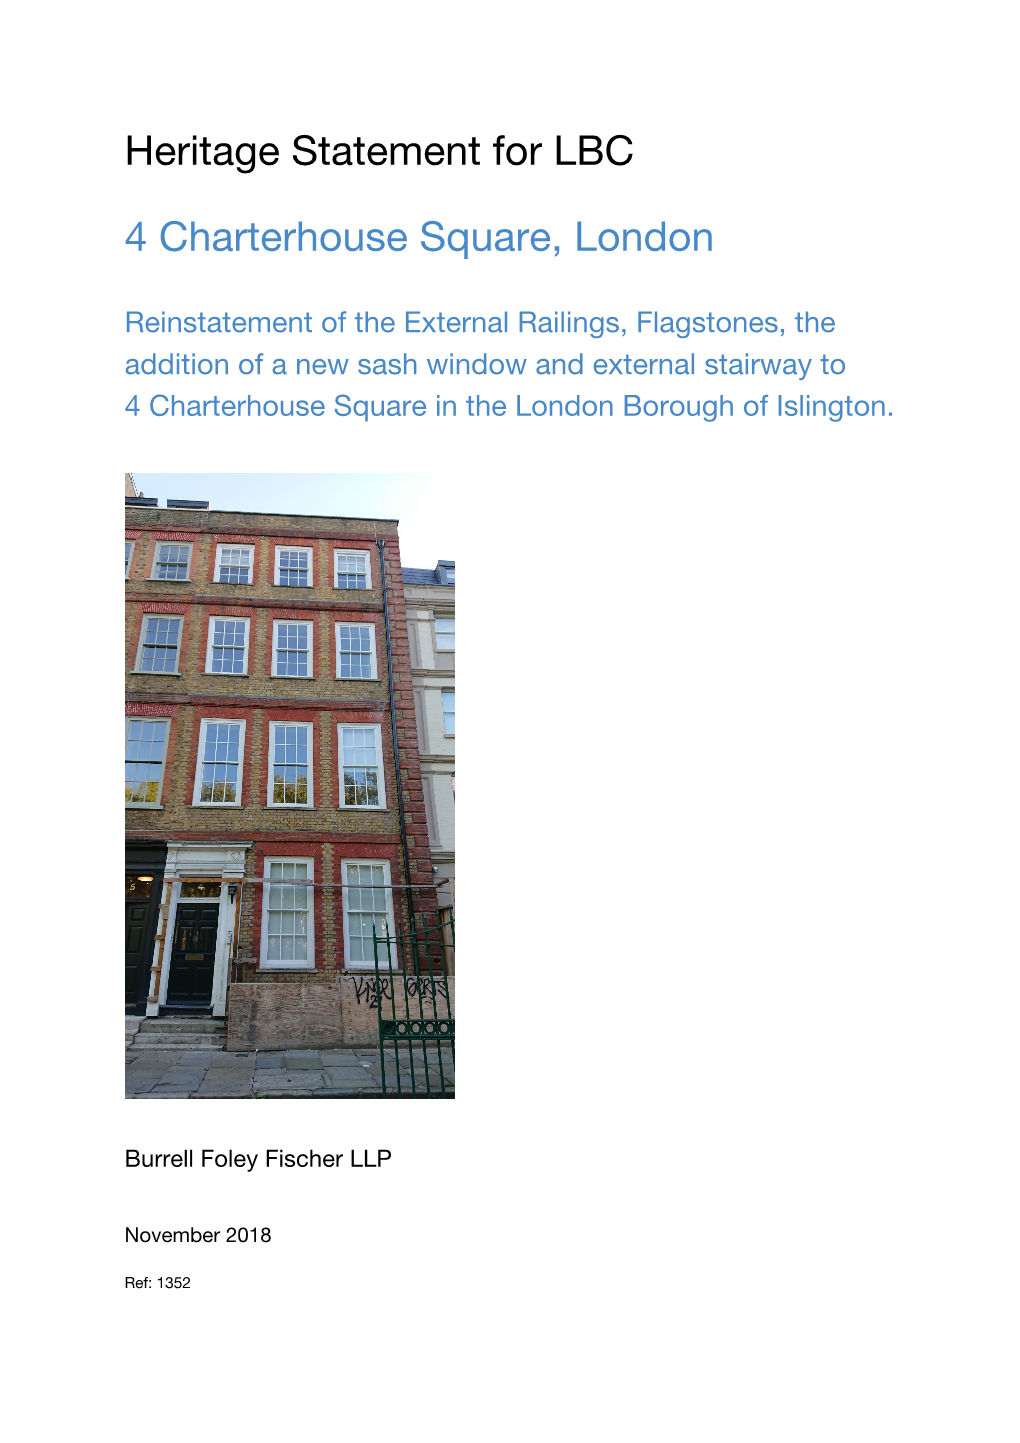 Heritage Statement for LBC 4 Charterhouse Square, London